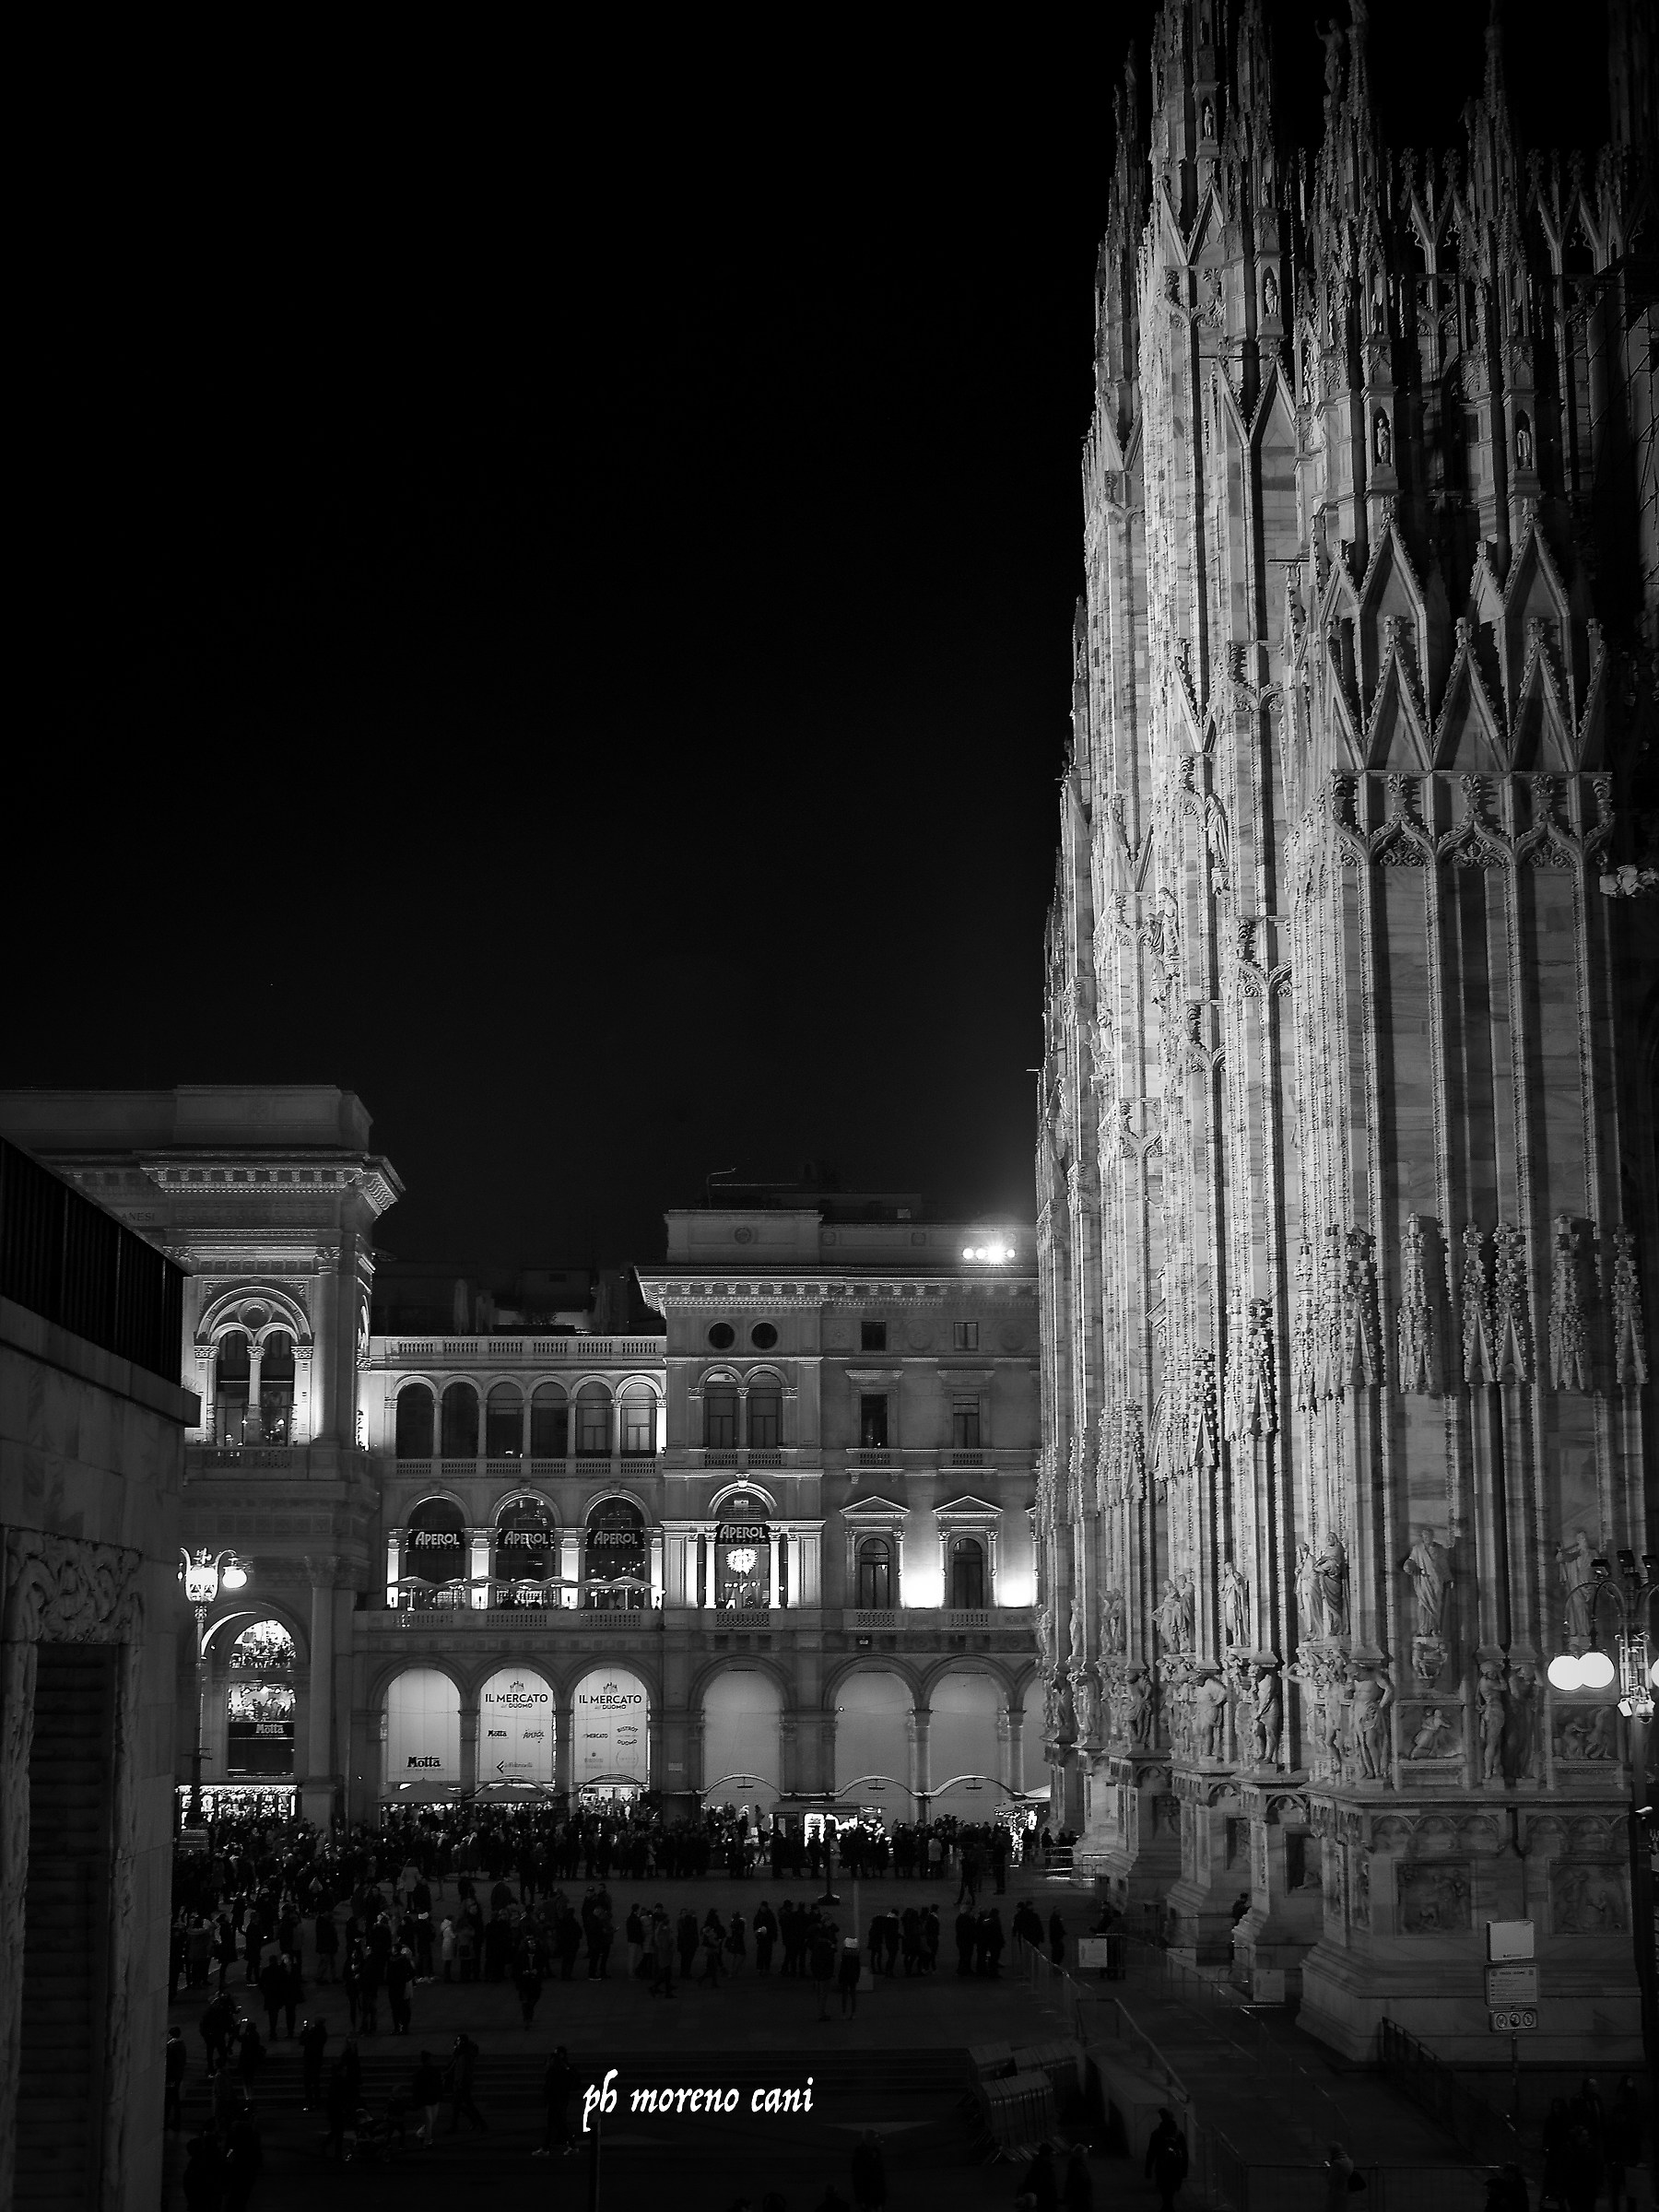 Milano by night...